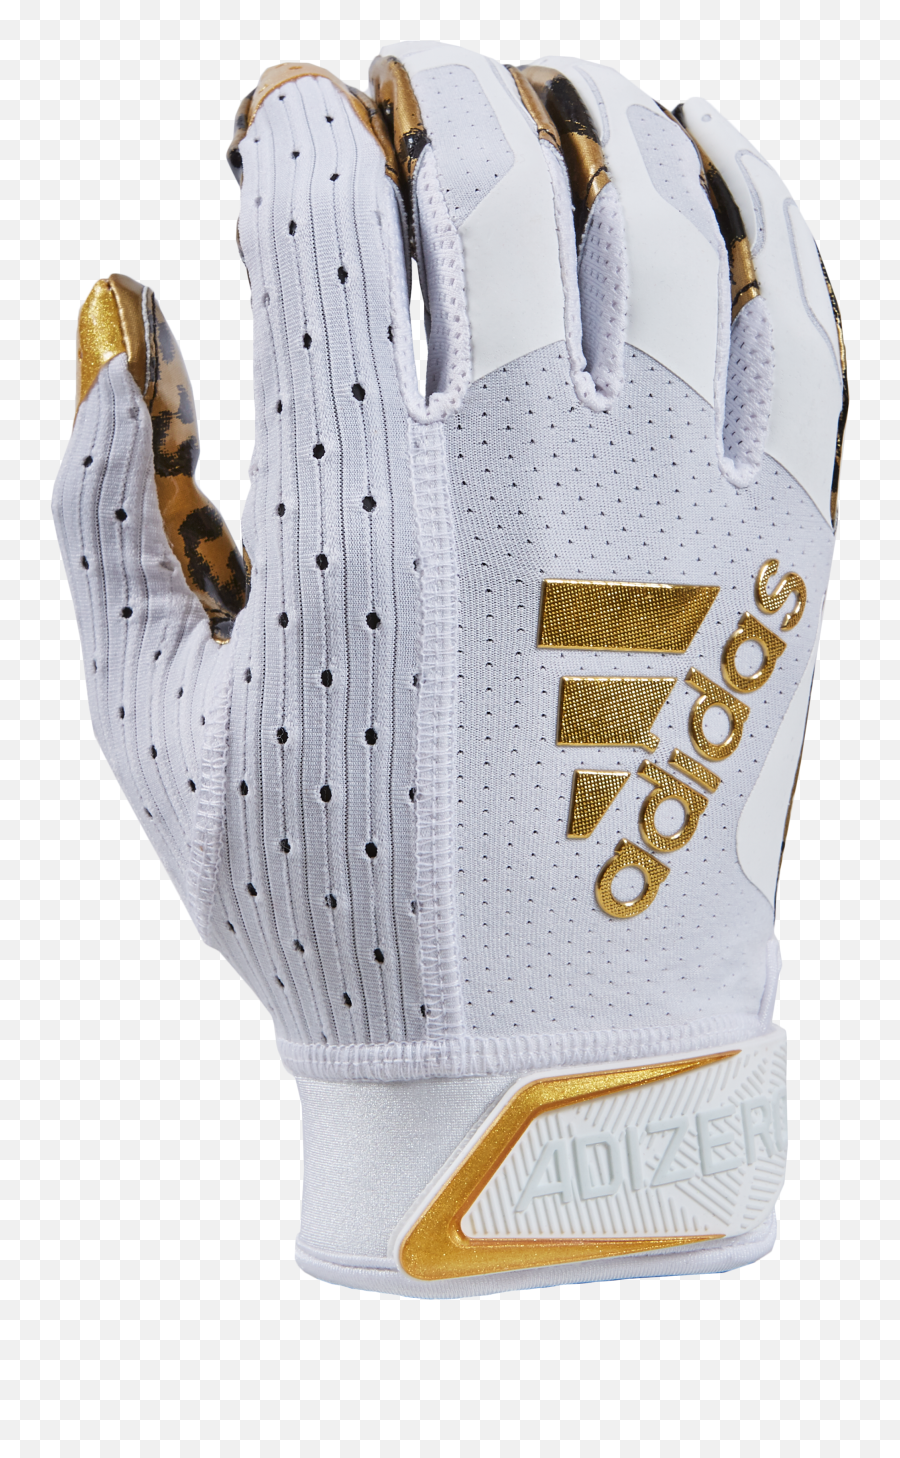 Adizero Football Gloves Off - Football Gloves At Academy Emoji,Adidas Emoji Receiver Gloves